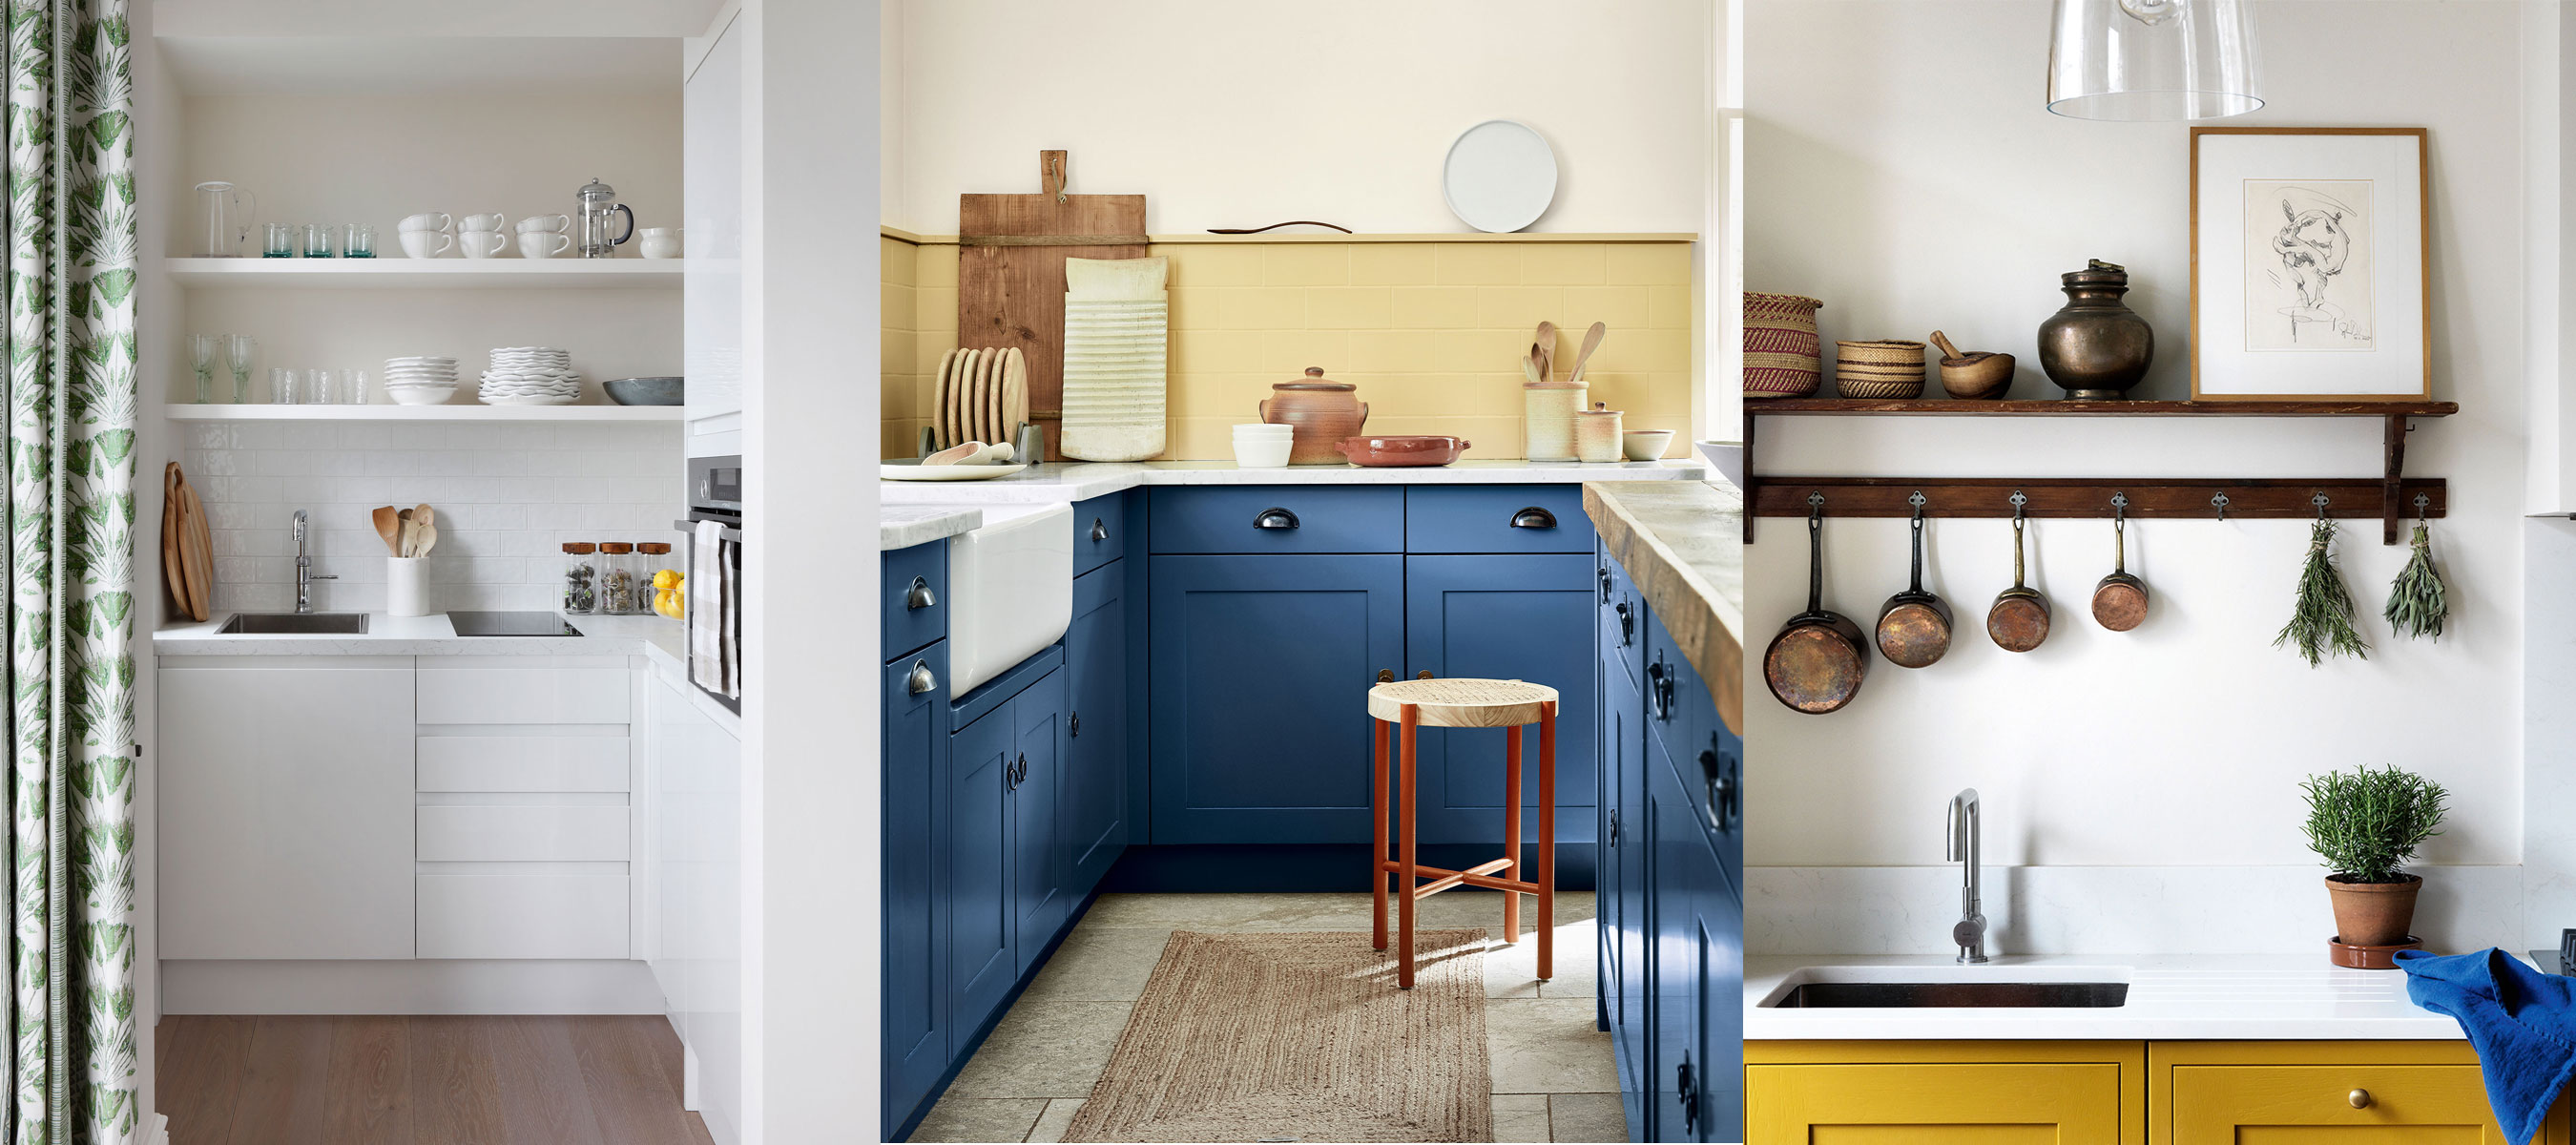 40 Best Small Kitchen Ideas: Tiny Kitchen Design And Decor |